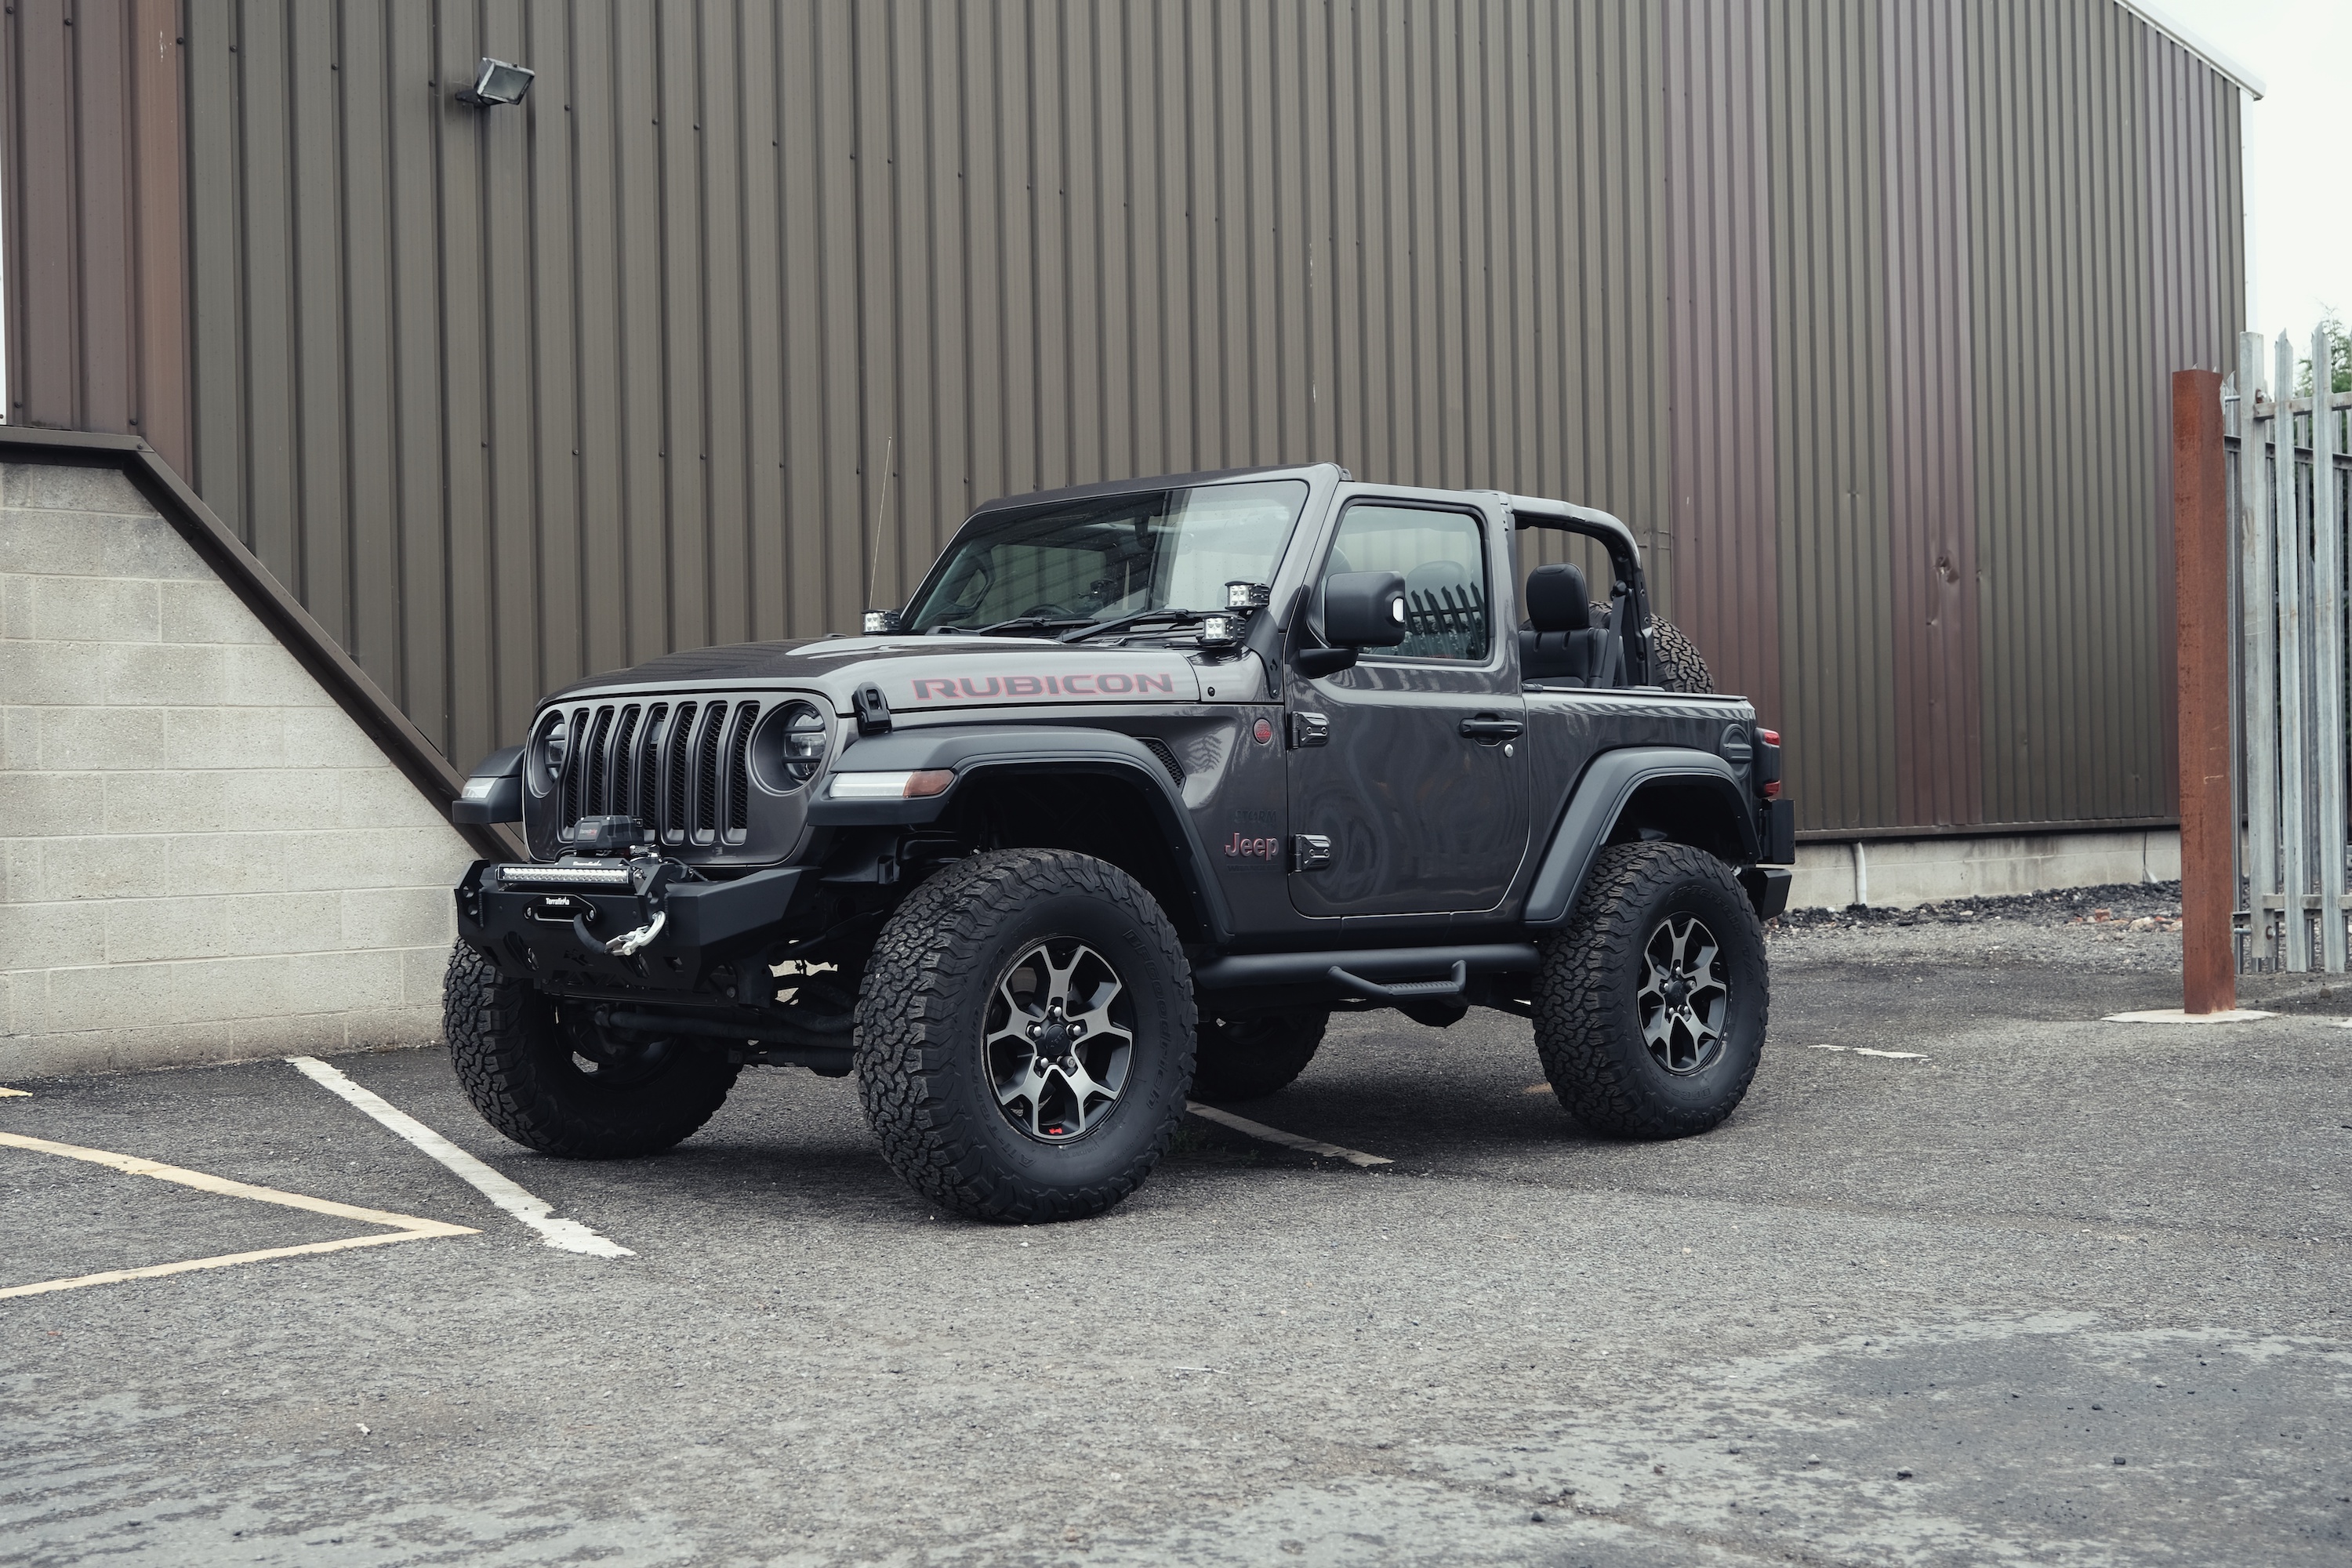 STORM-59, 2019 Granite Crystal Jeep Wrangler JL Rubicon 2 Door  |  Showcase | Storm Jeeps